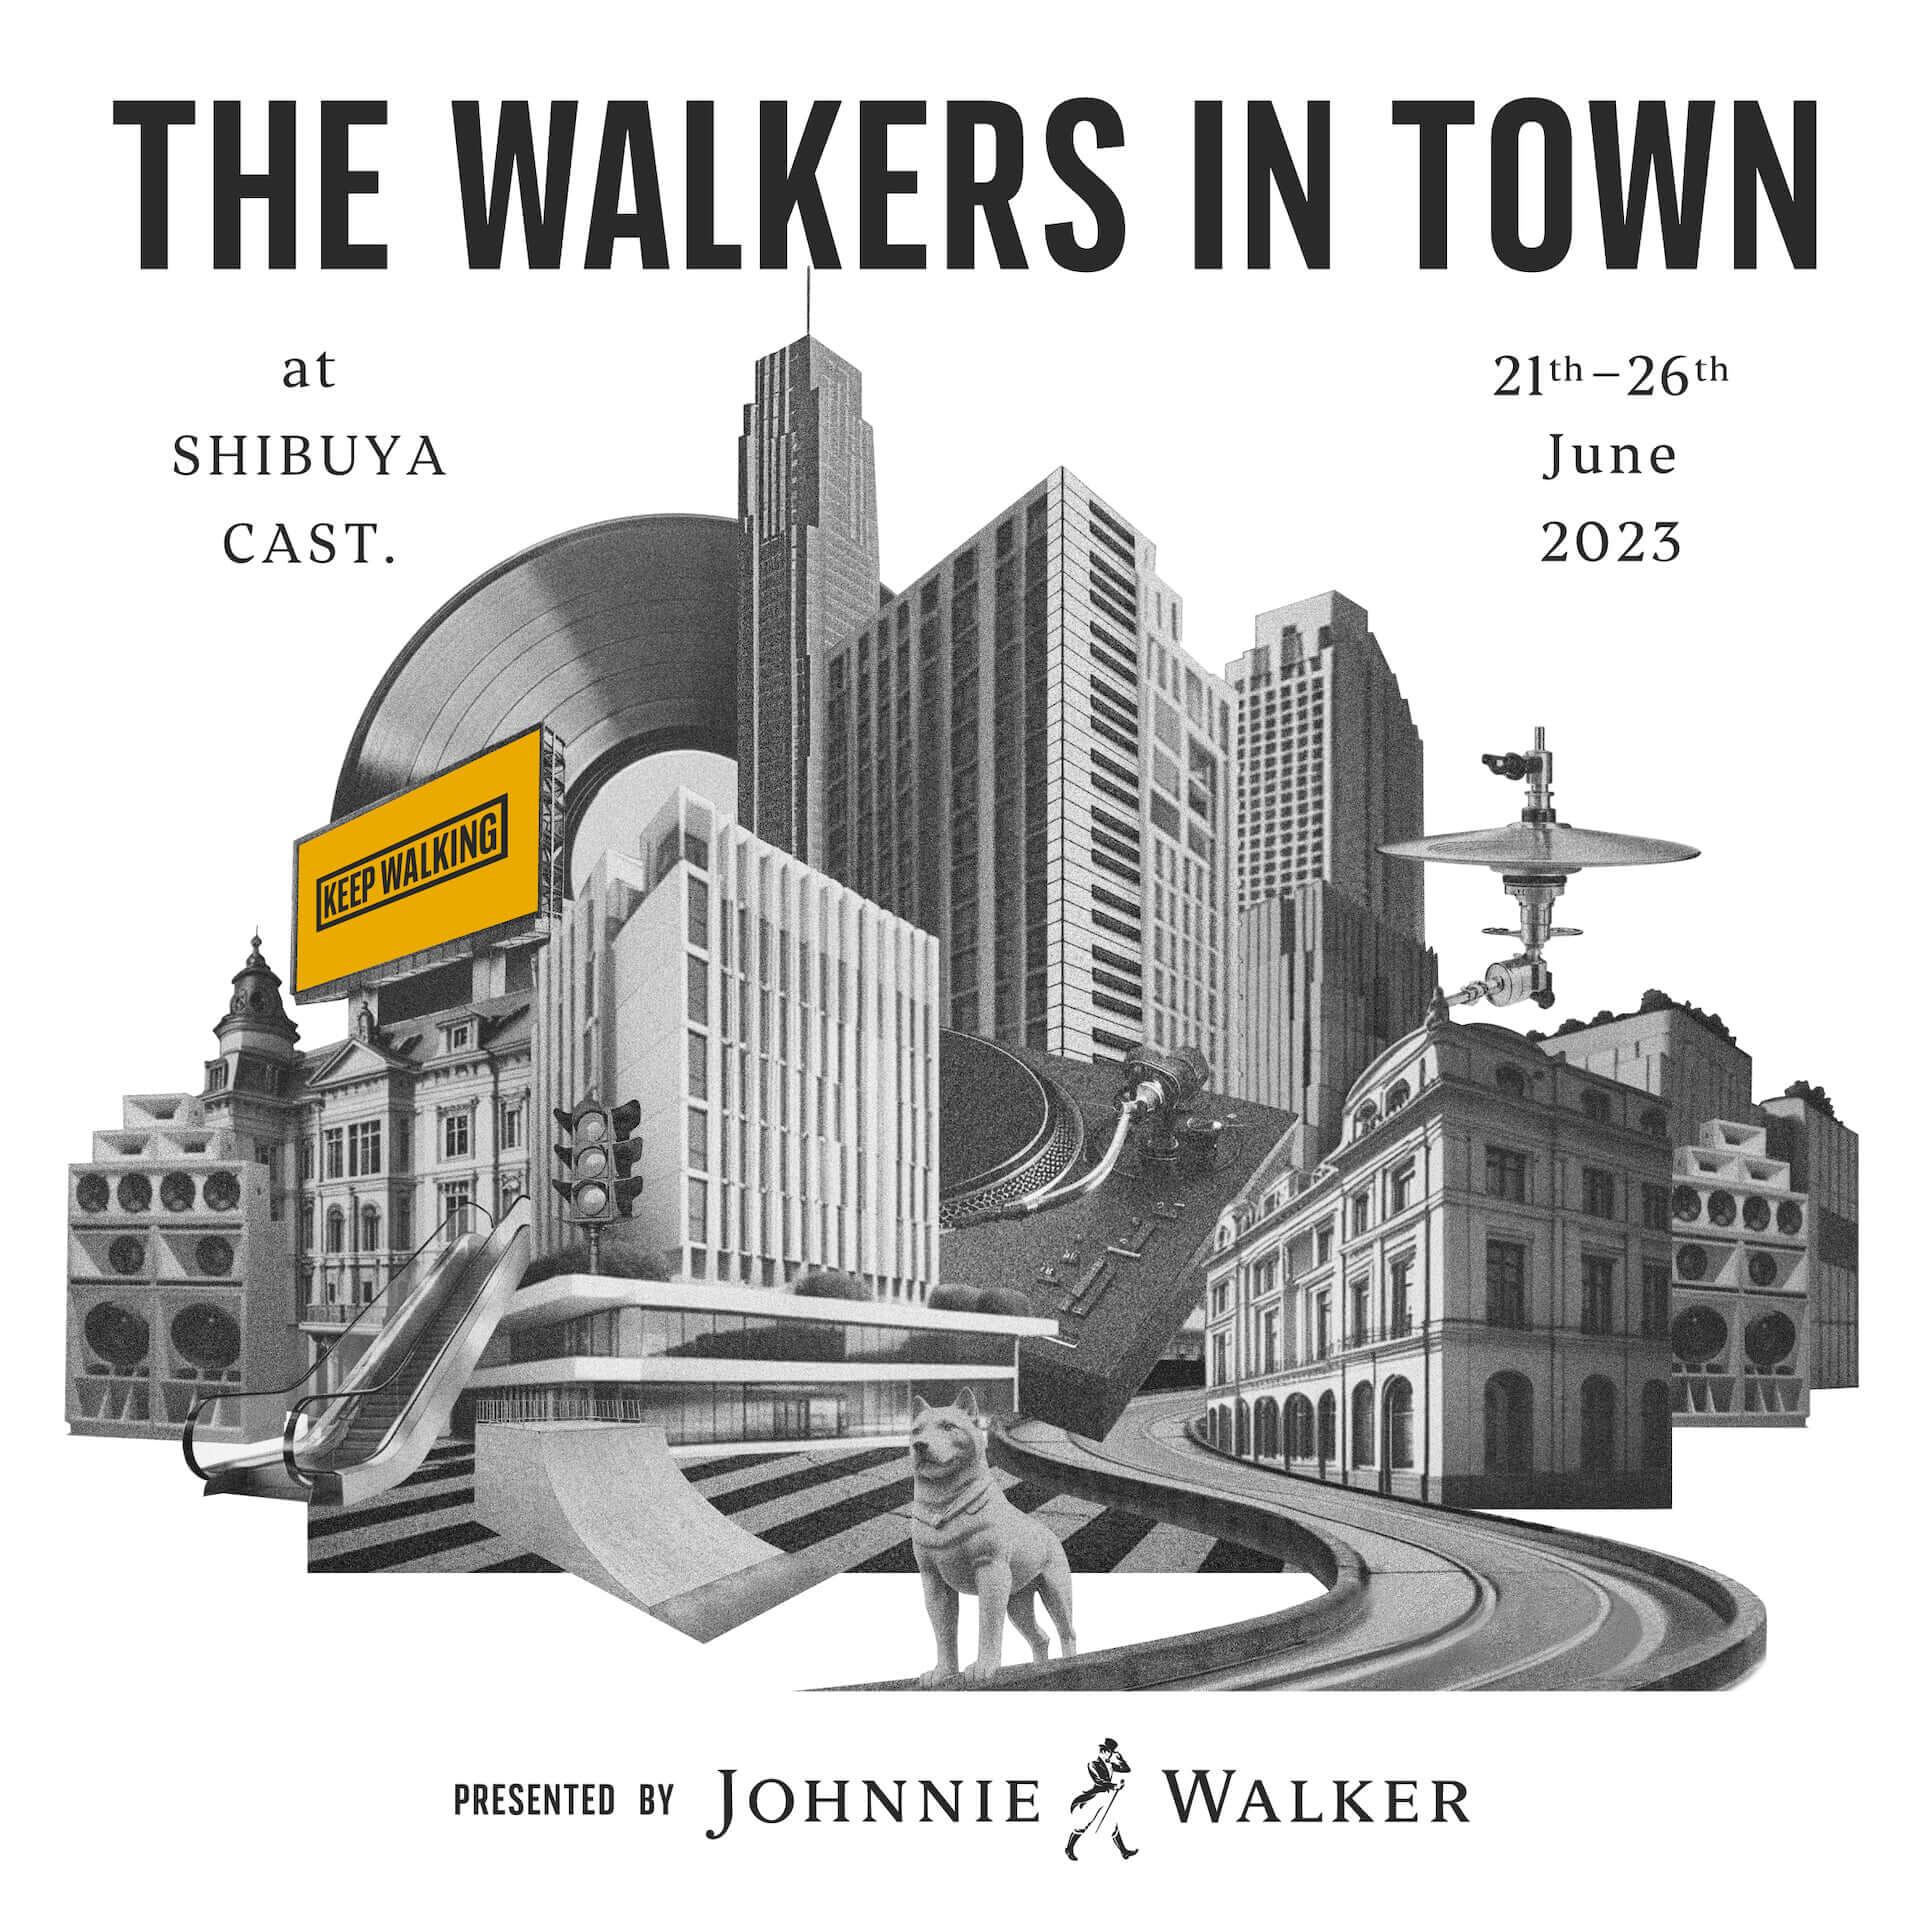 THE WALKERS IN TOWN presented by JOHNNIE WALKER